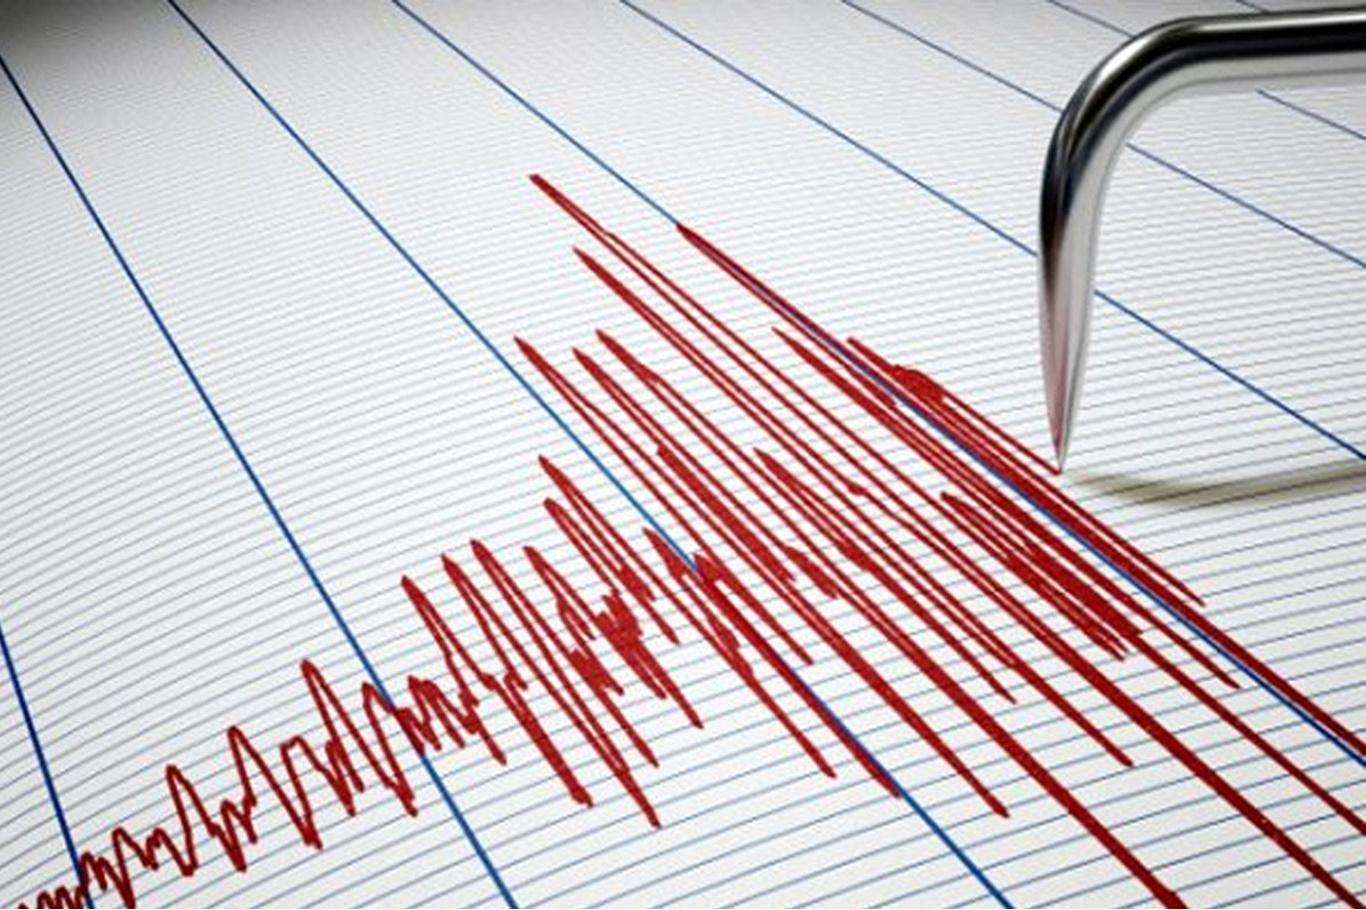 A 4.2 magnitude earthquake jolts central Turkey